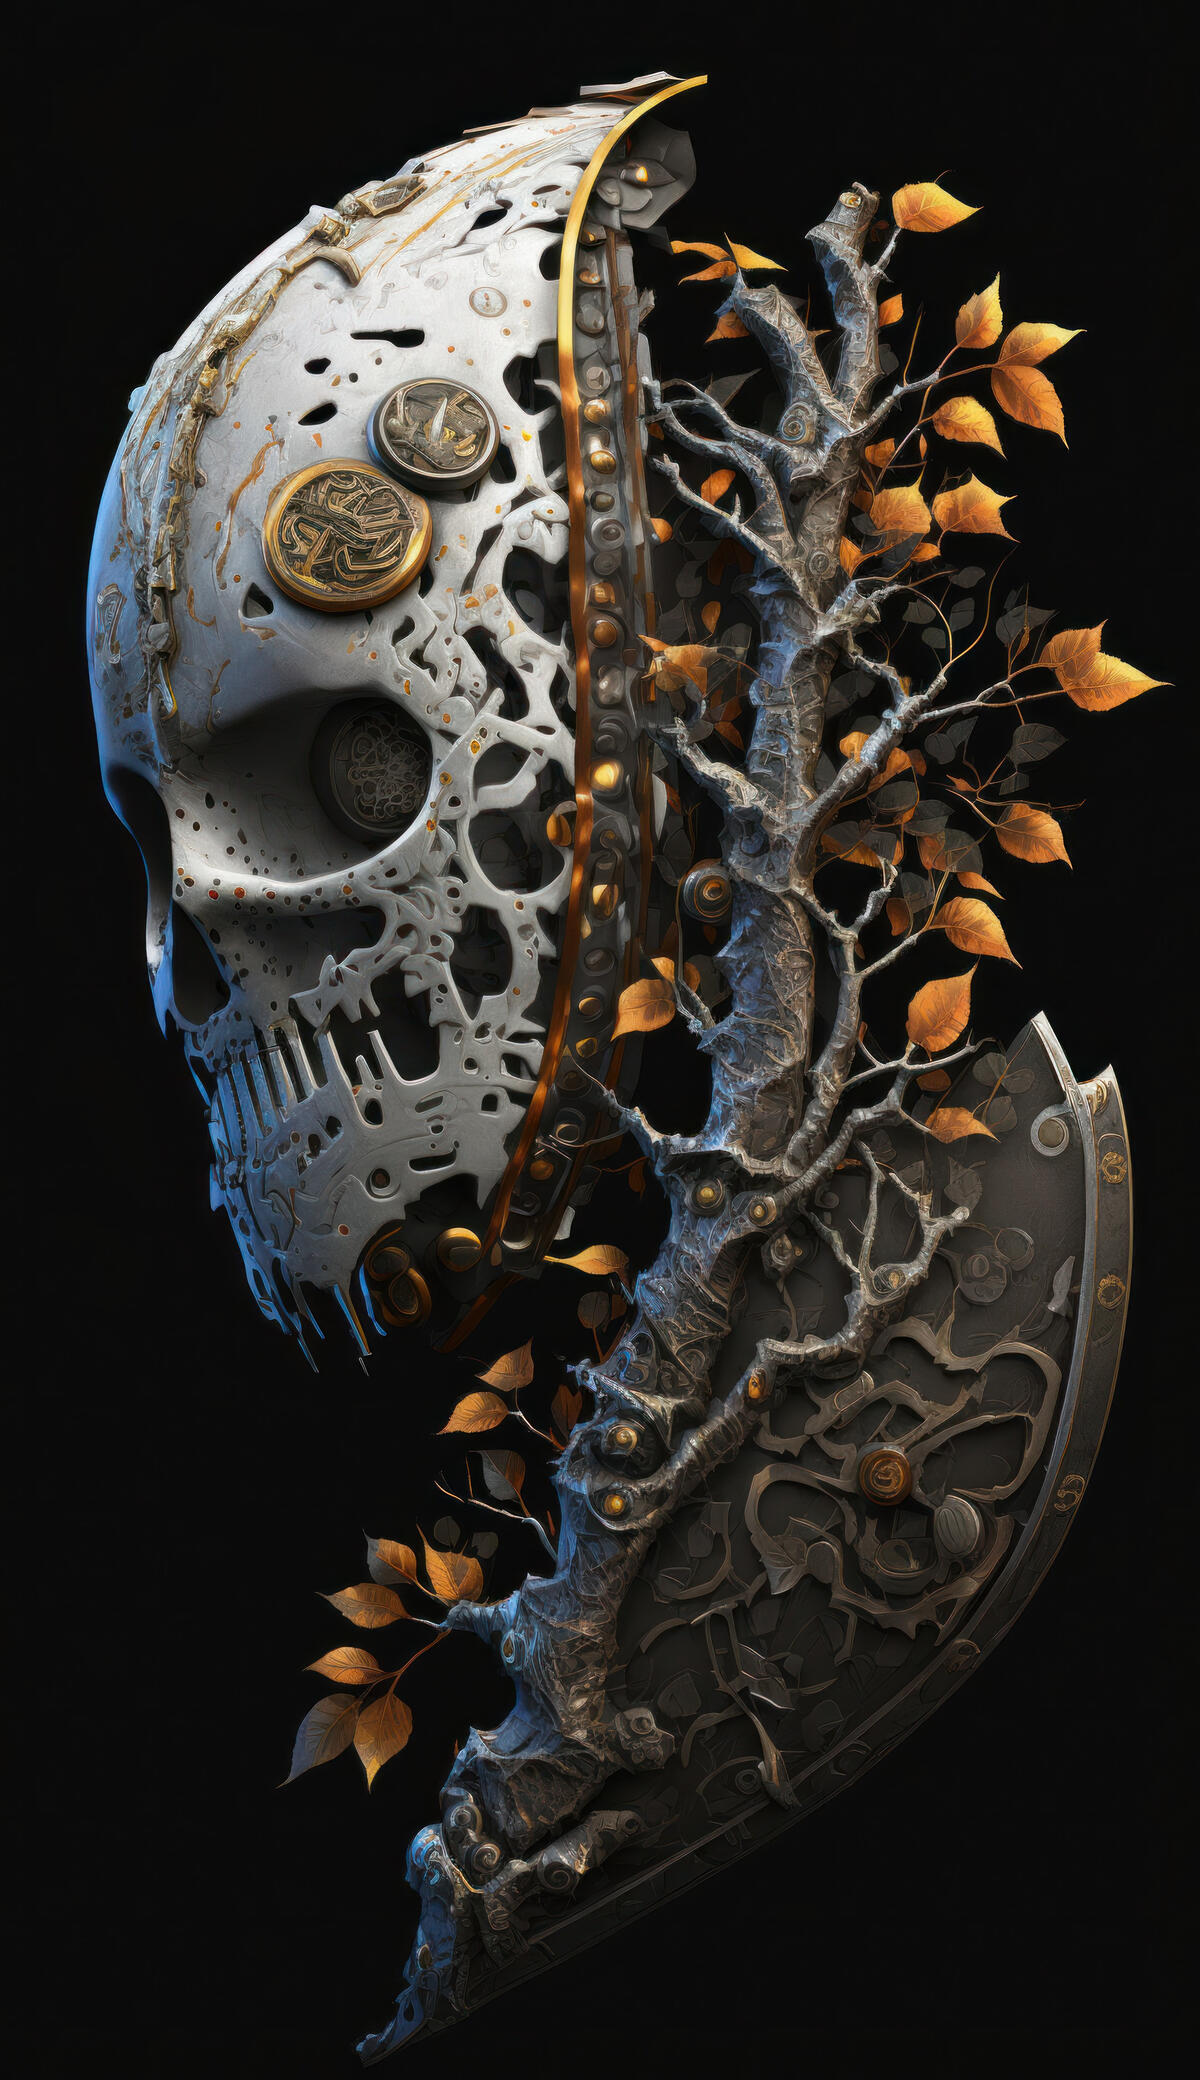 Wallpaper depicting a sci-fi skull printed on a 3D printer